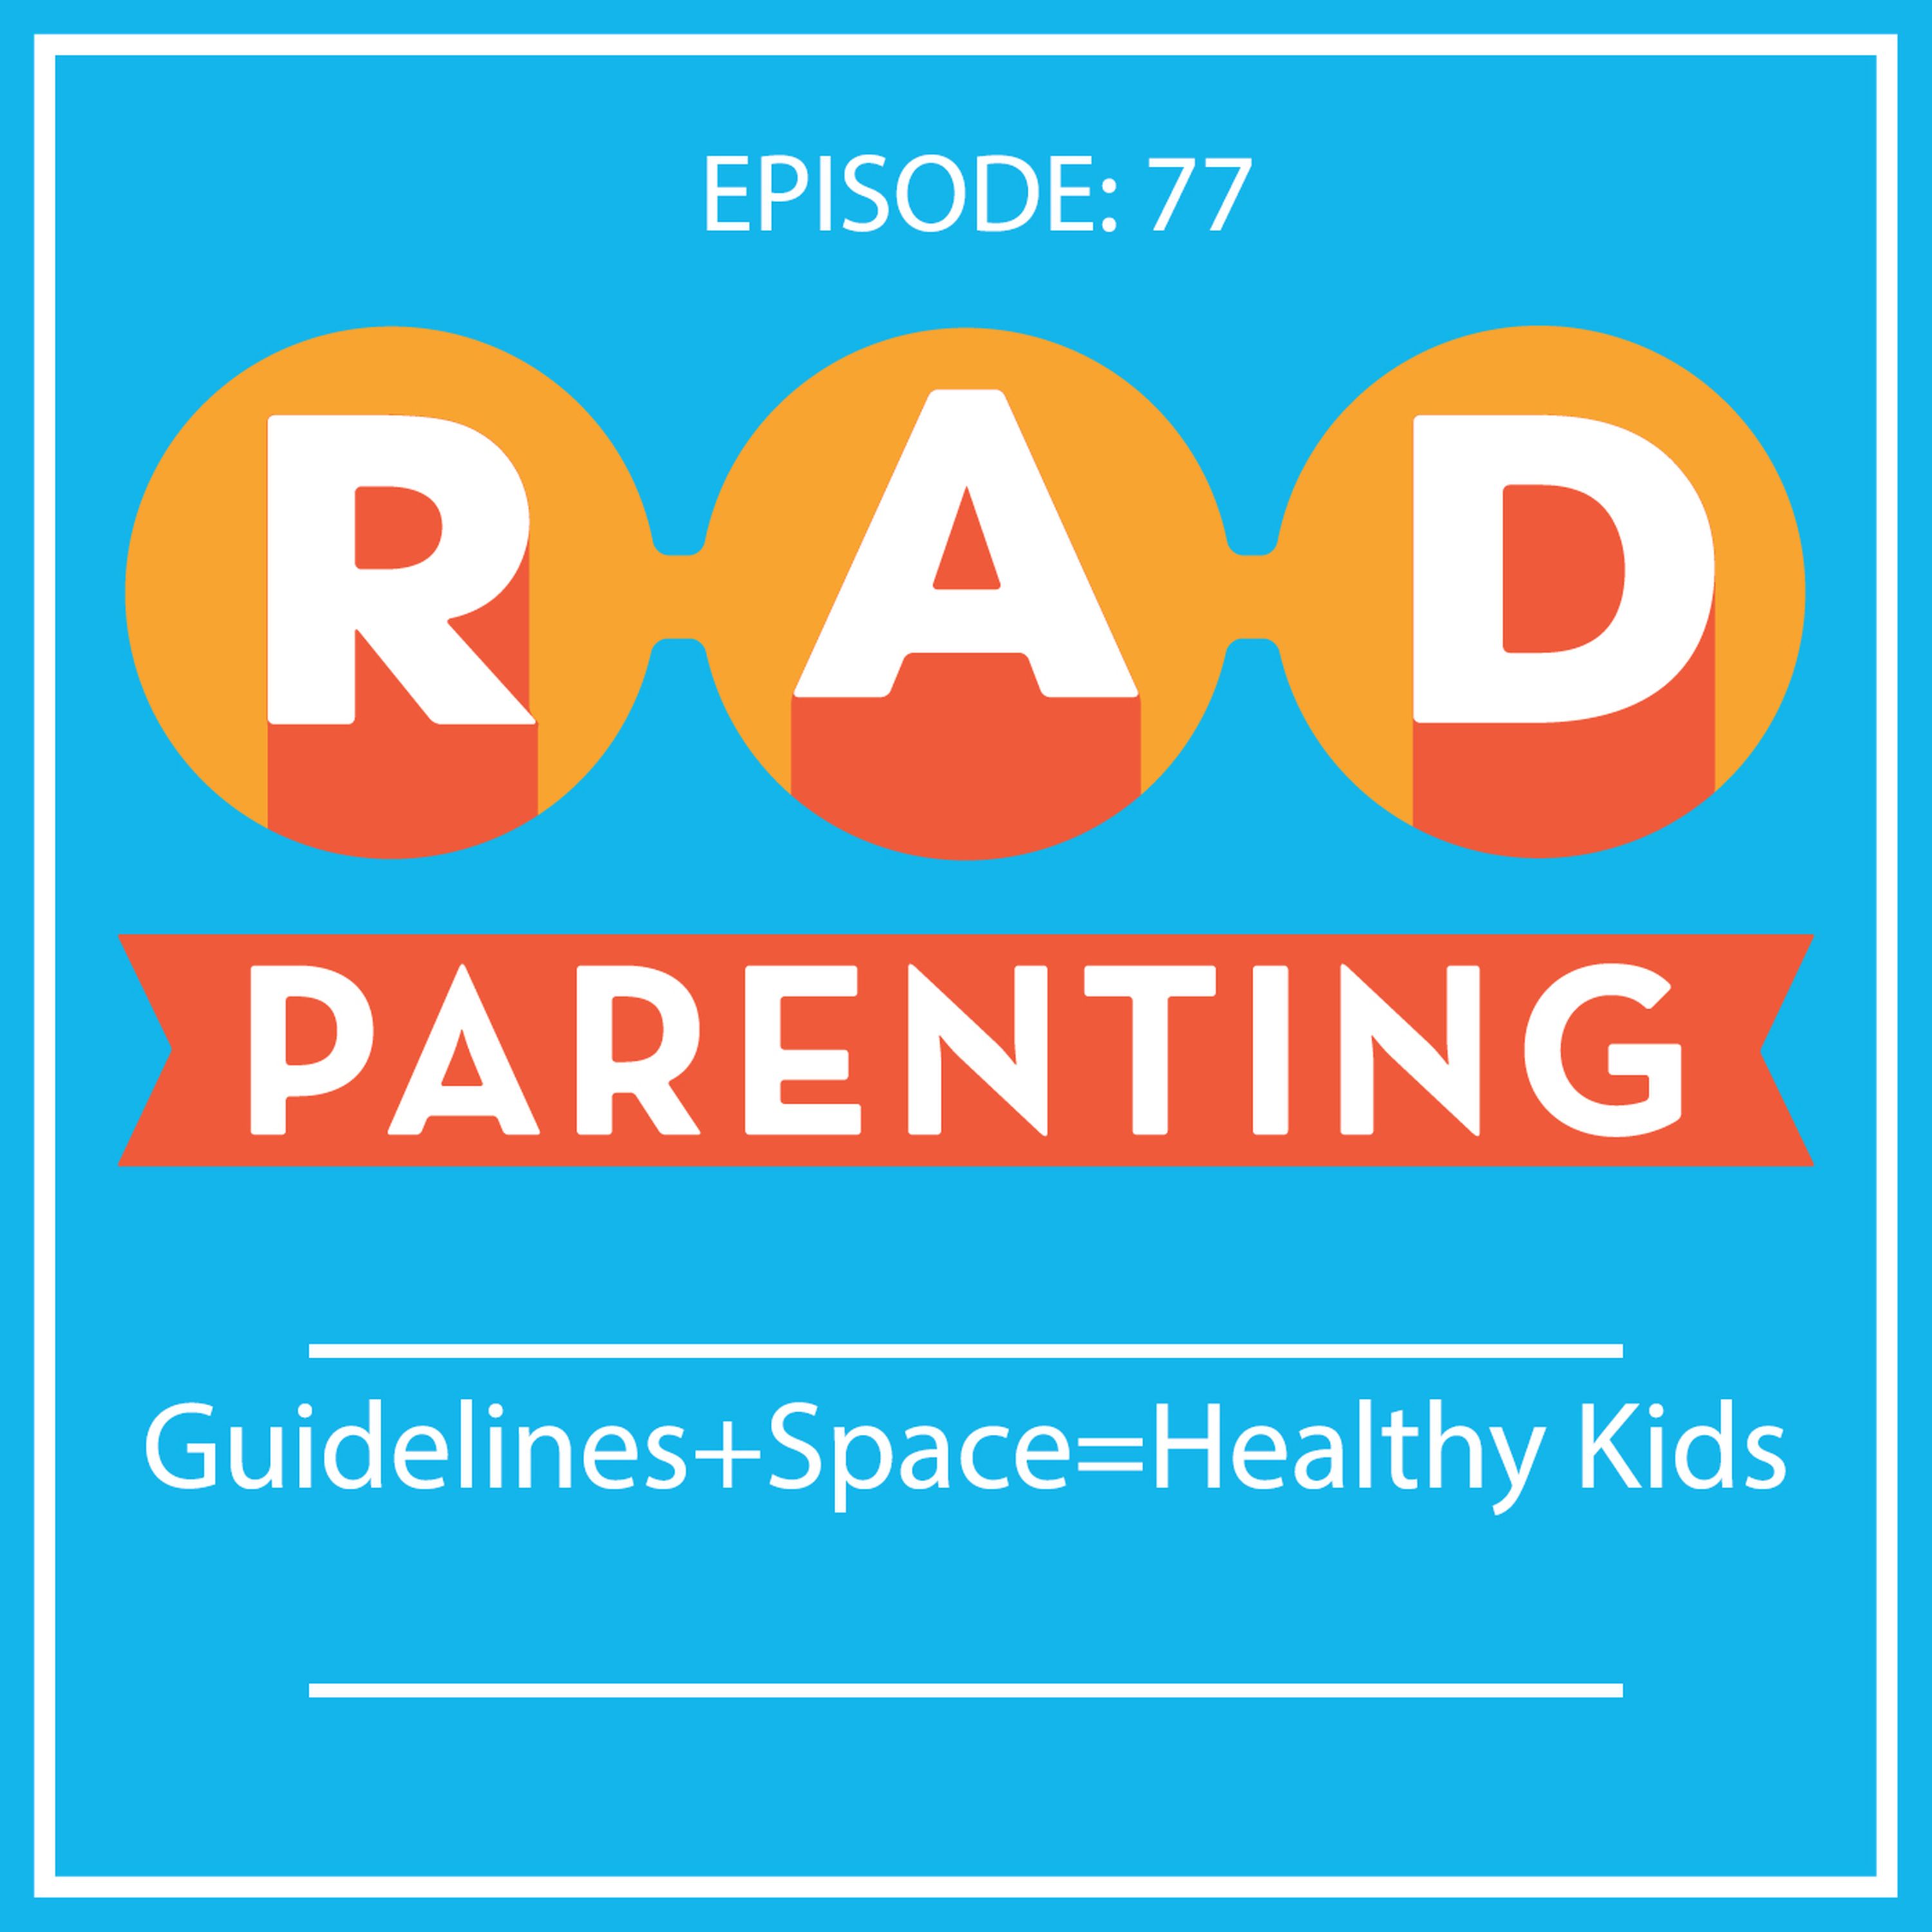 Guidelines+Space=Healthy Kids